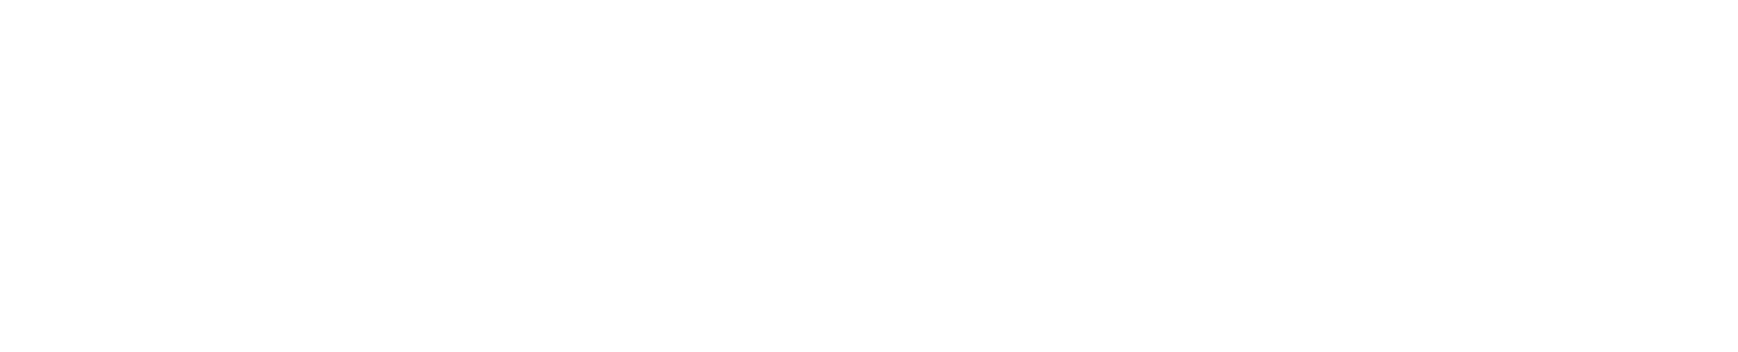 Logo_R&D_Research_Corner